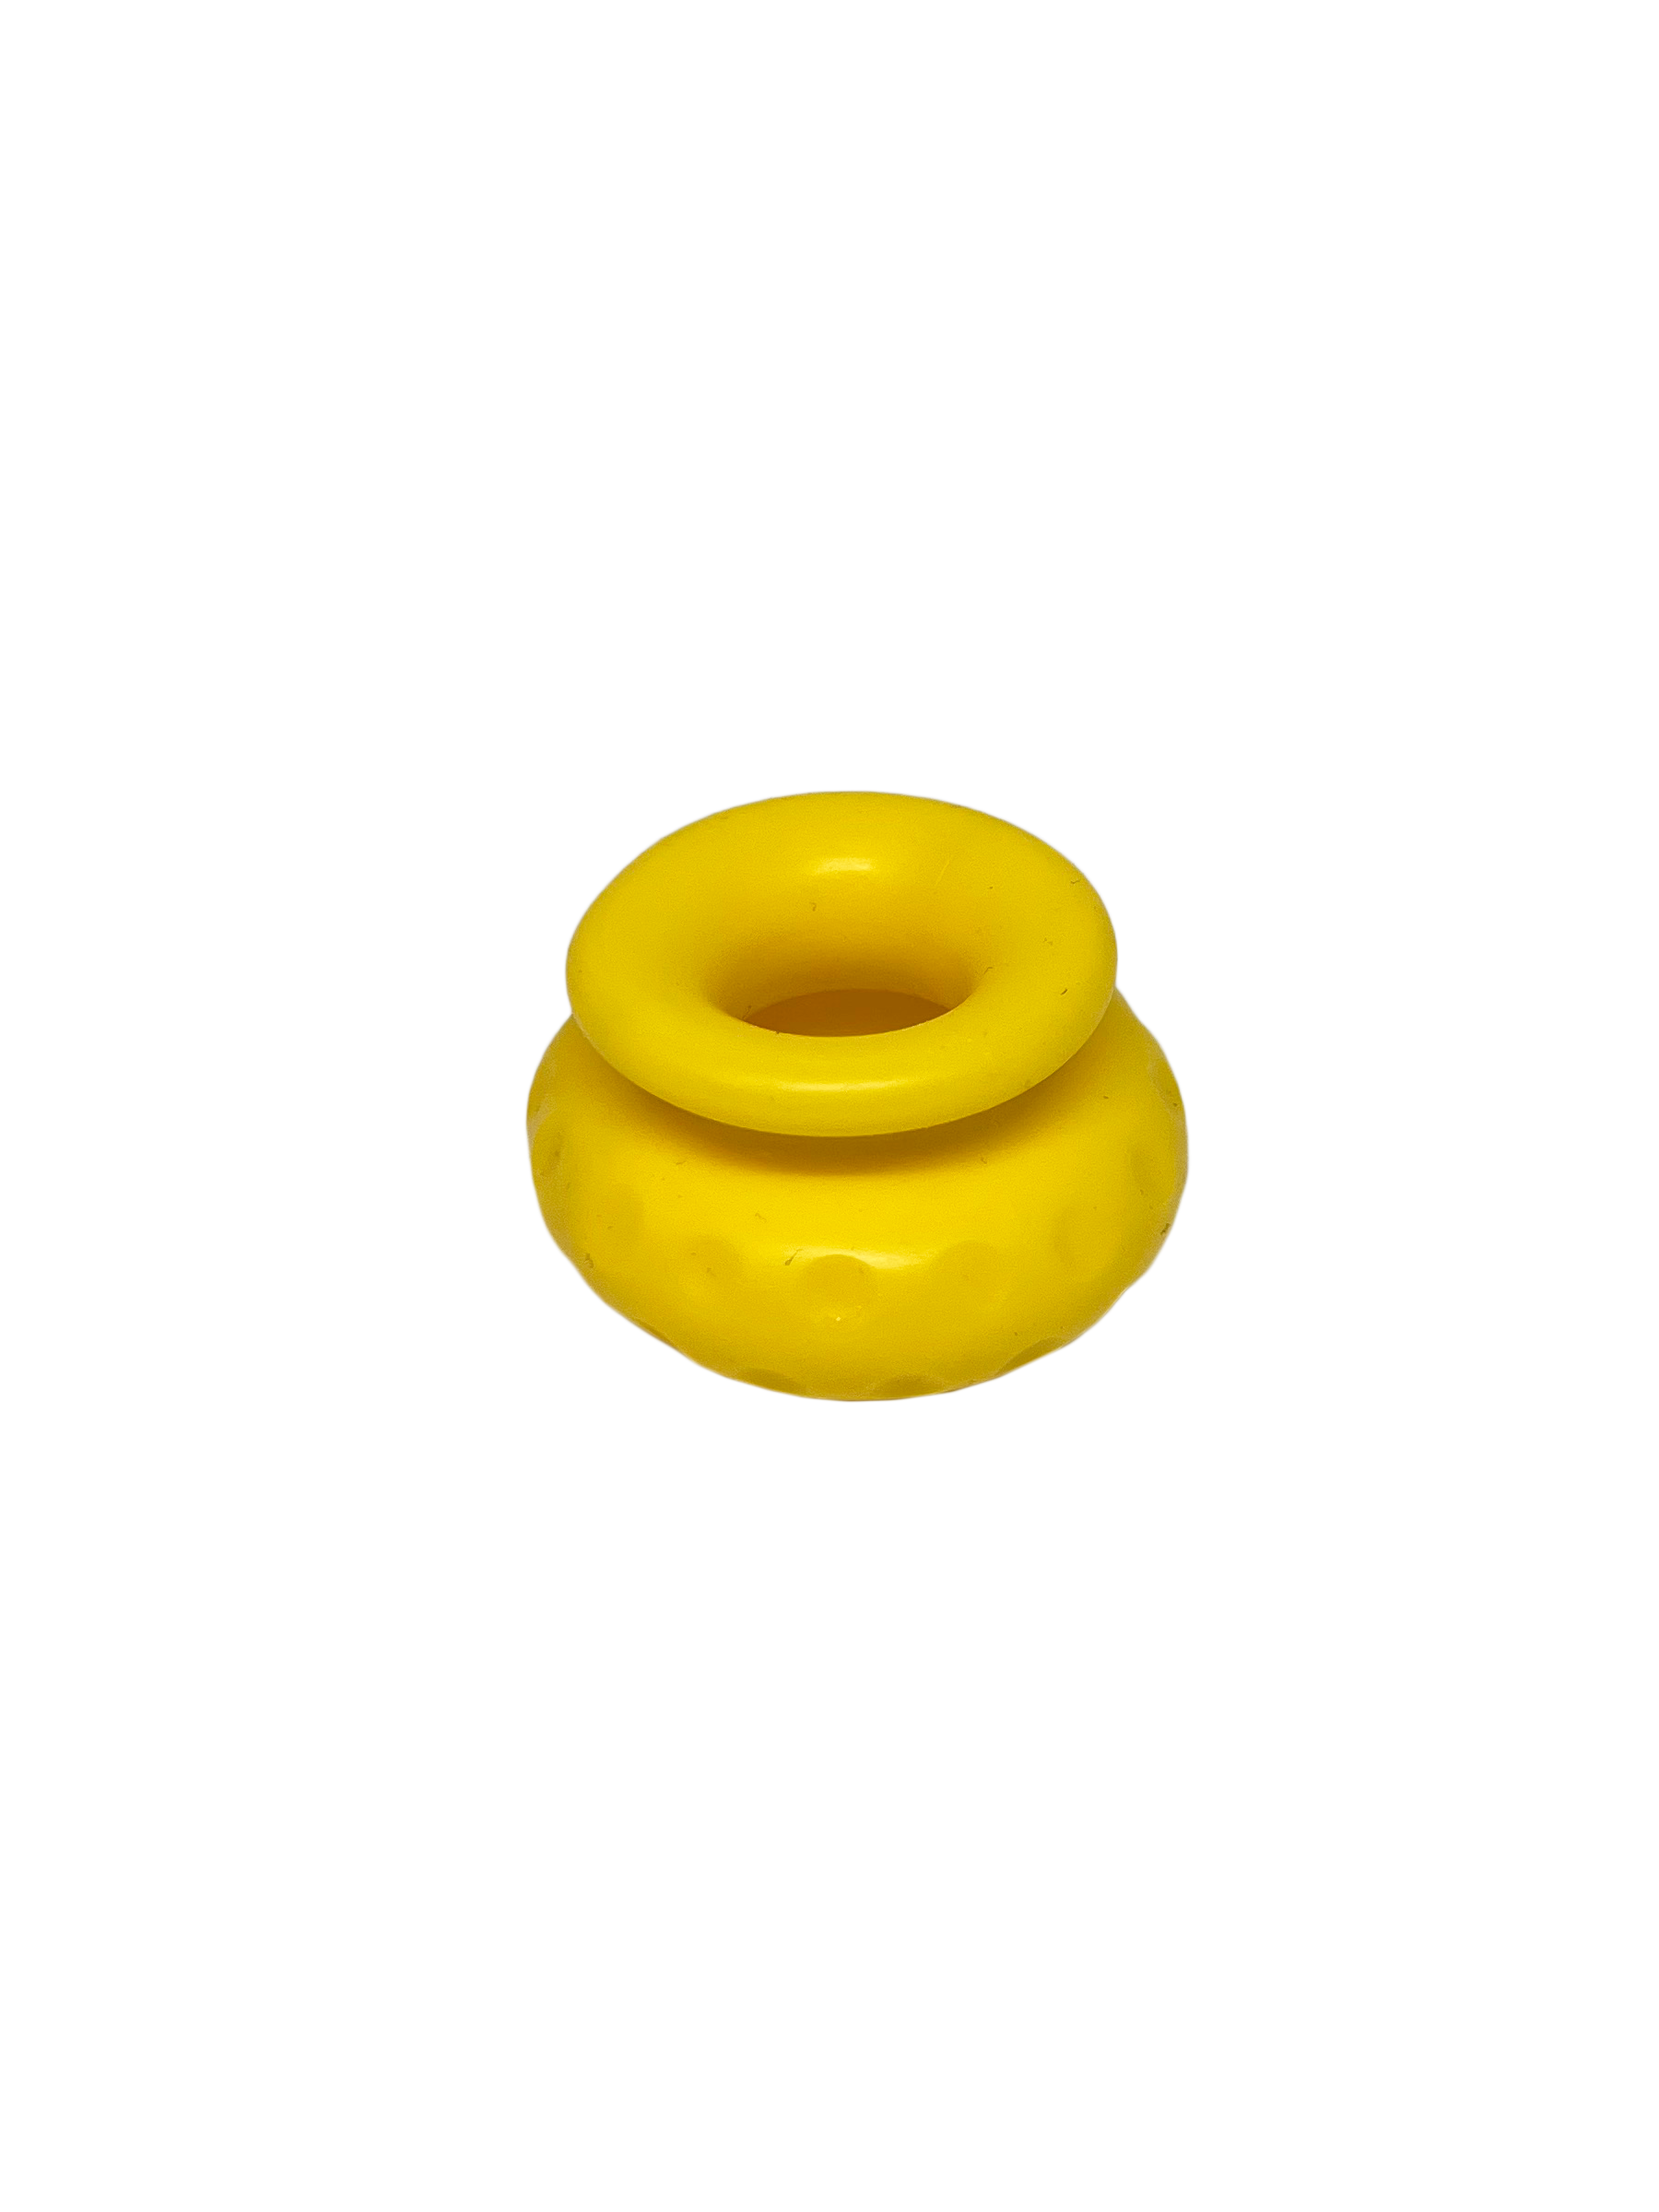 Ohnut Penis Ring in Yellow